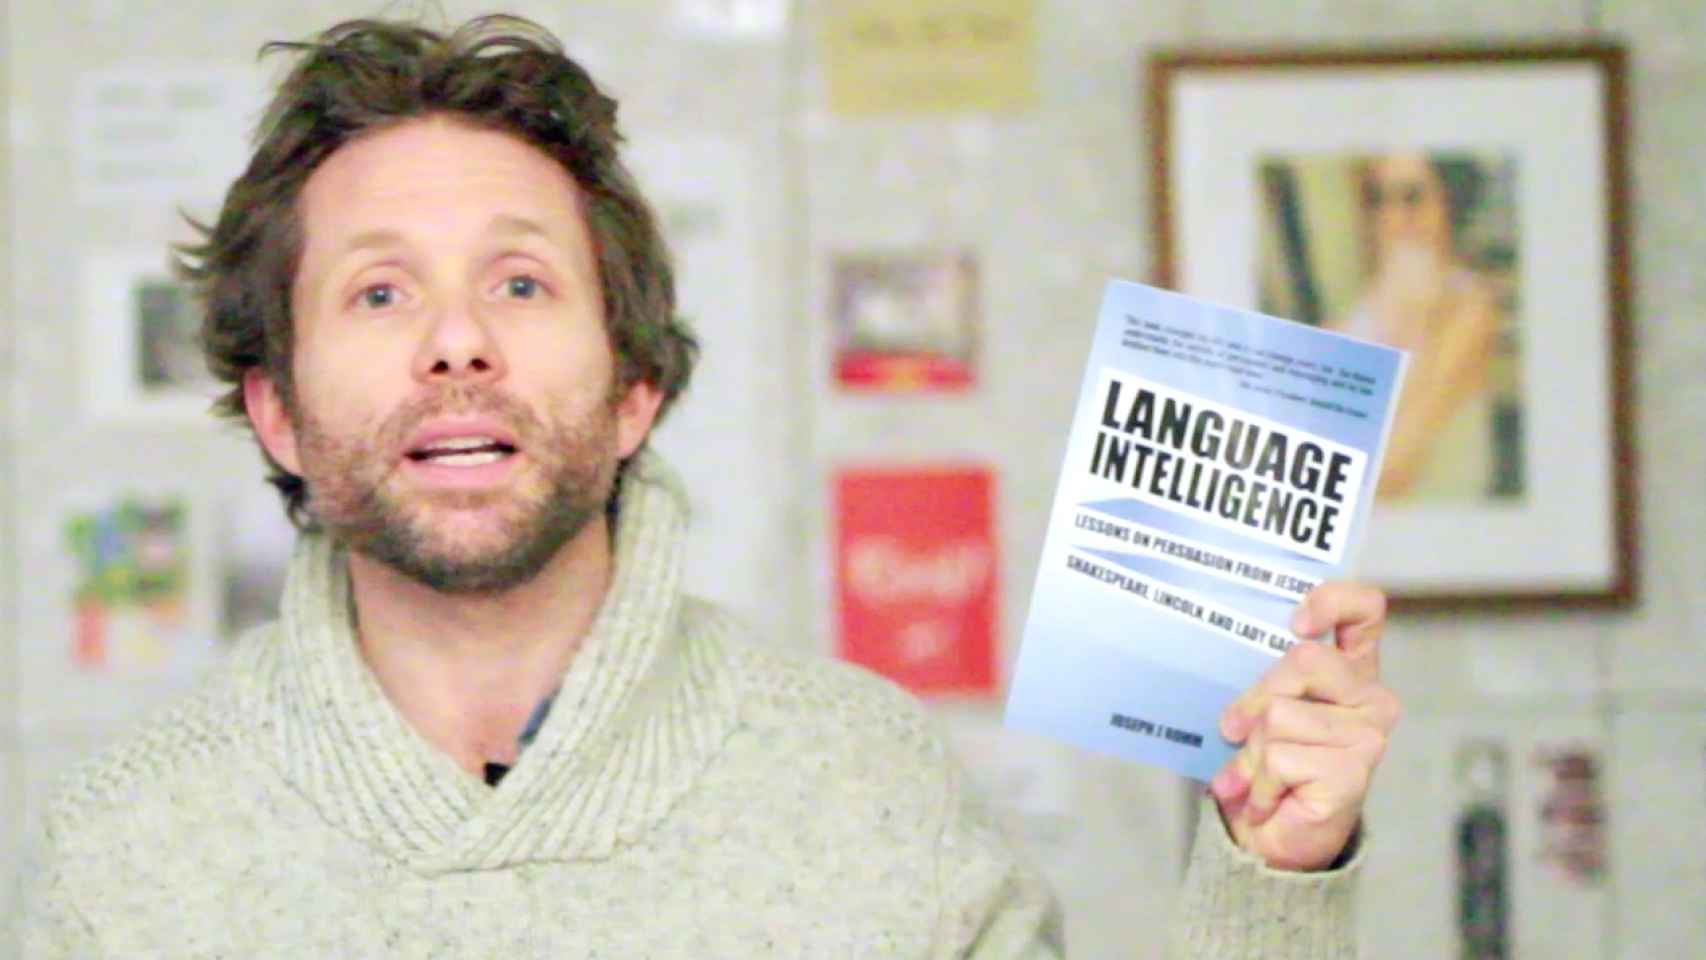 Analizamos el libro 'Language Intelligence'.